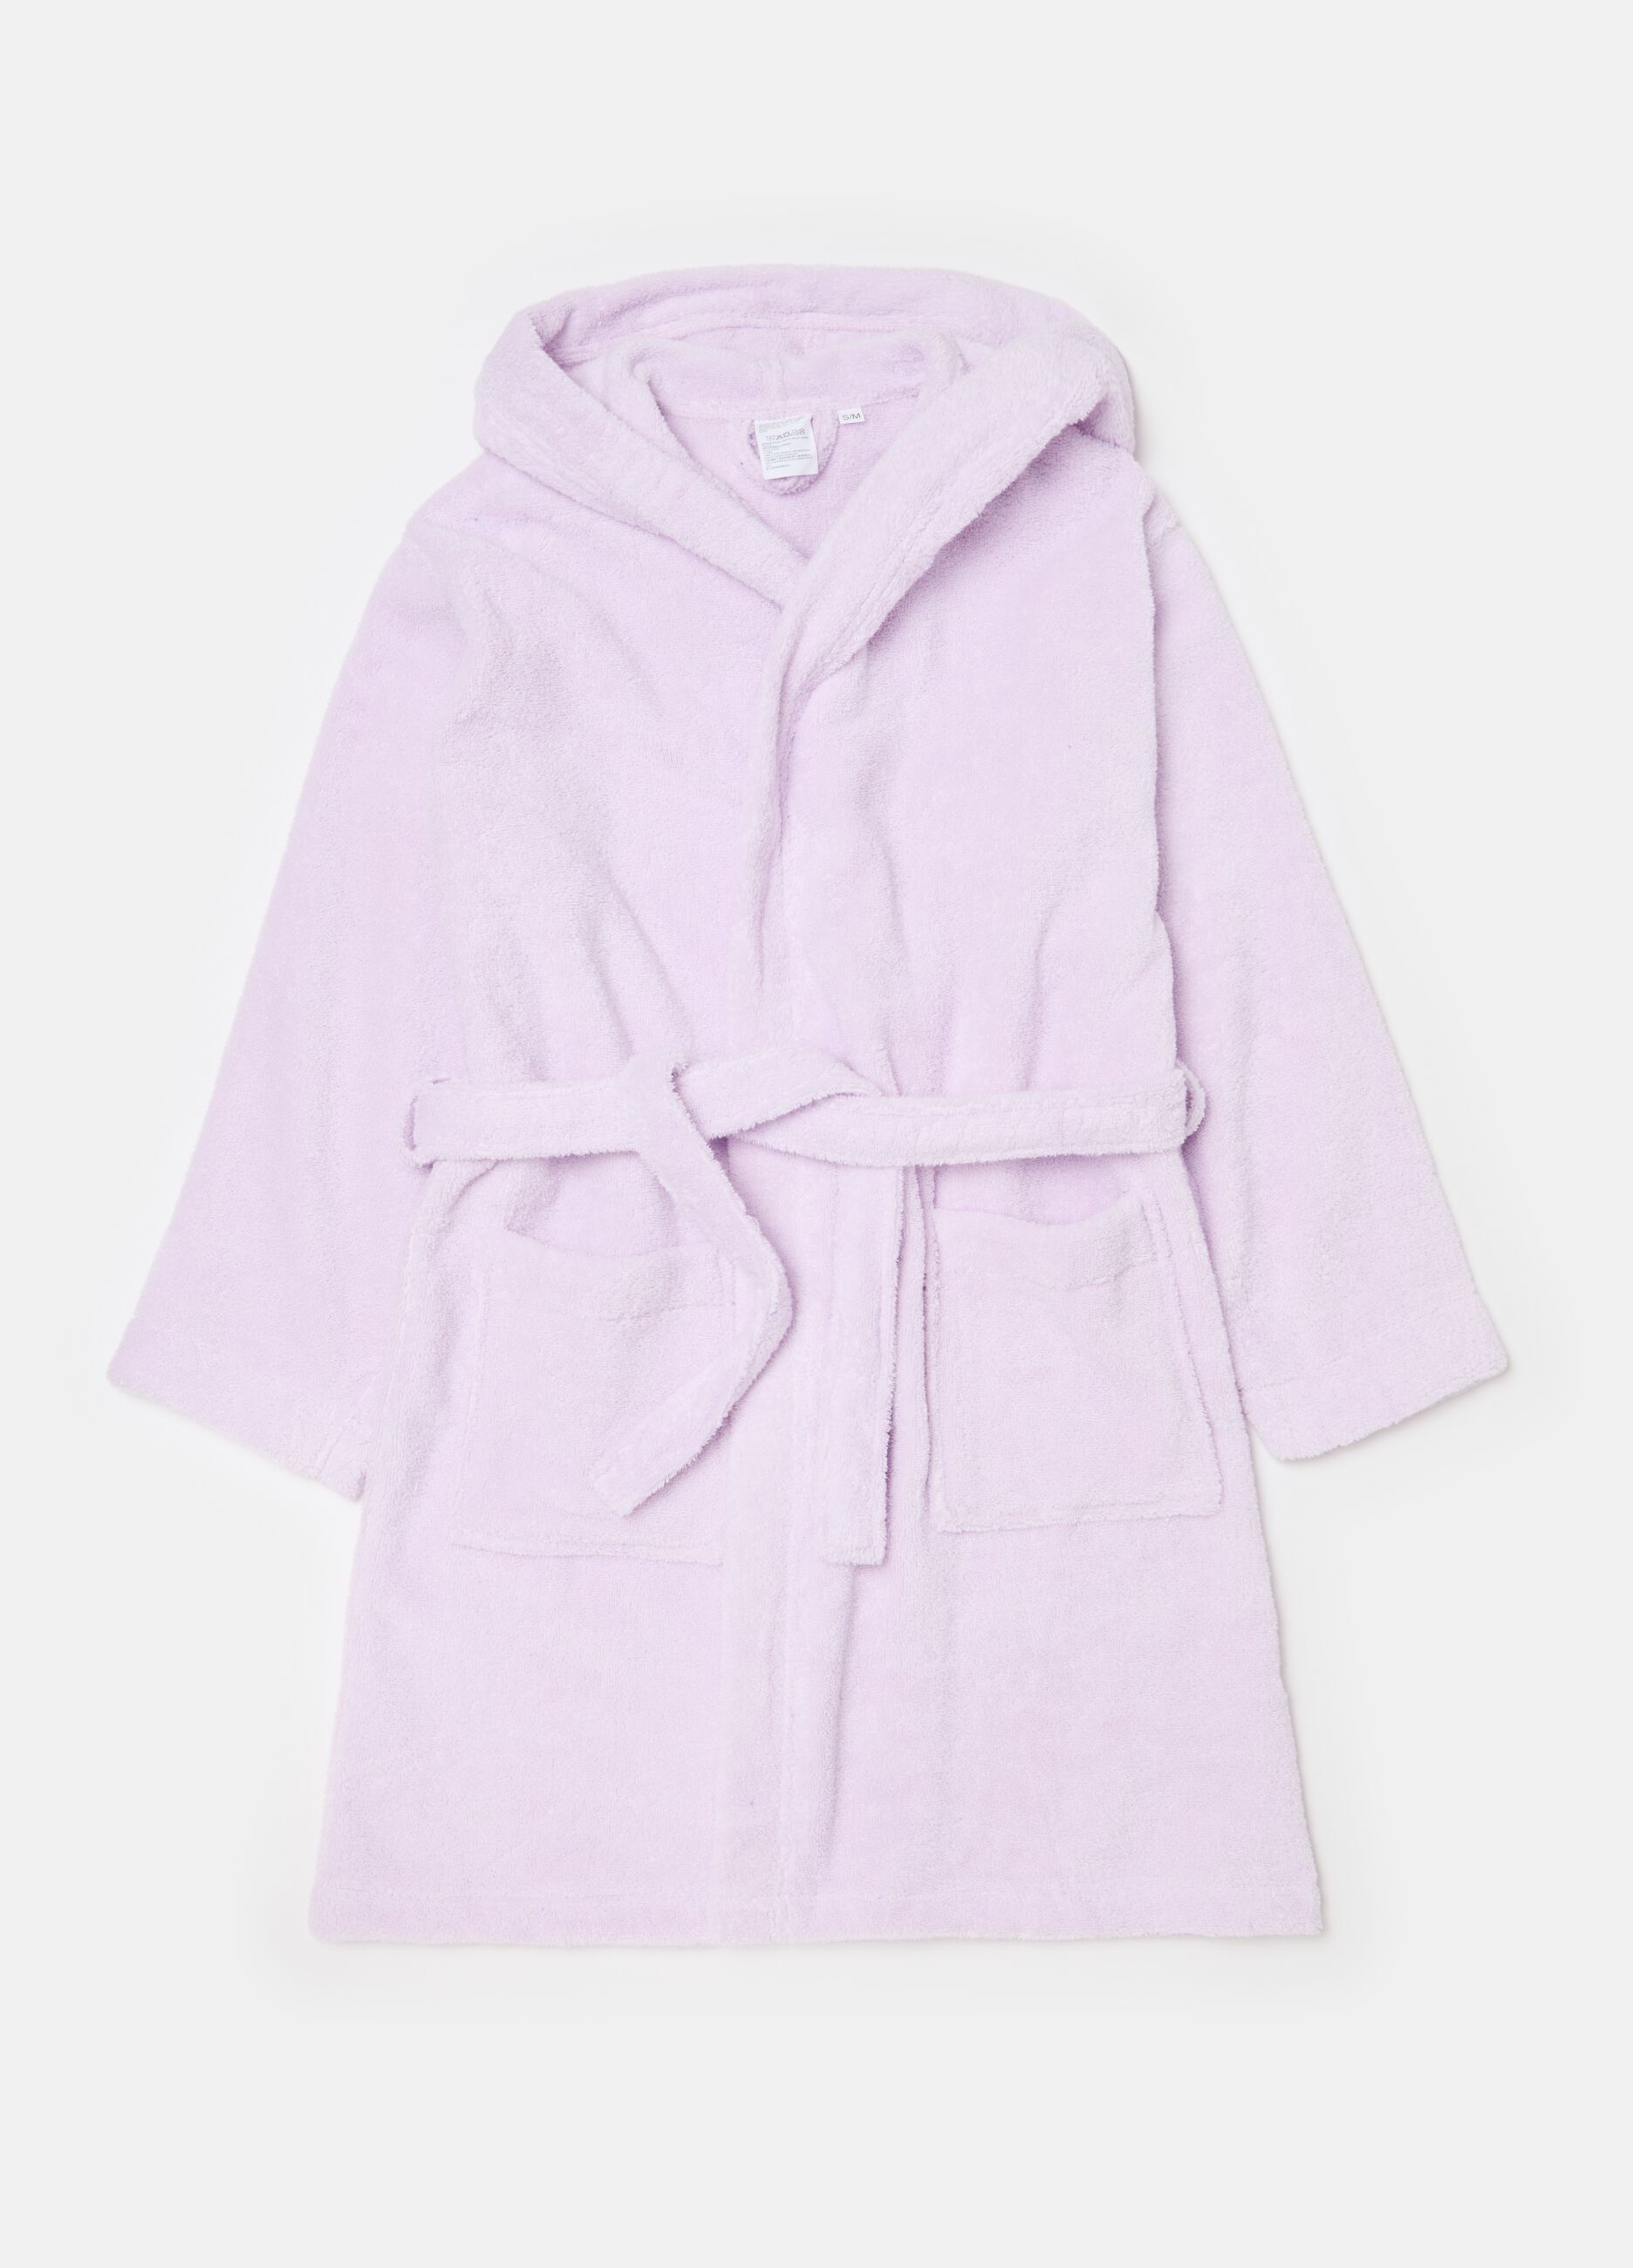 Solid colour bathrobe size S/M